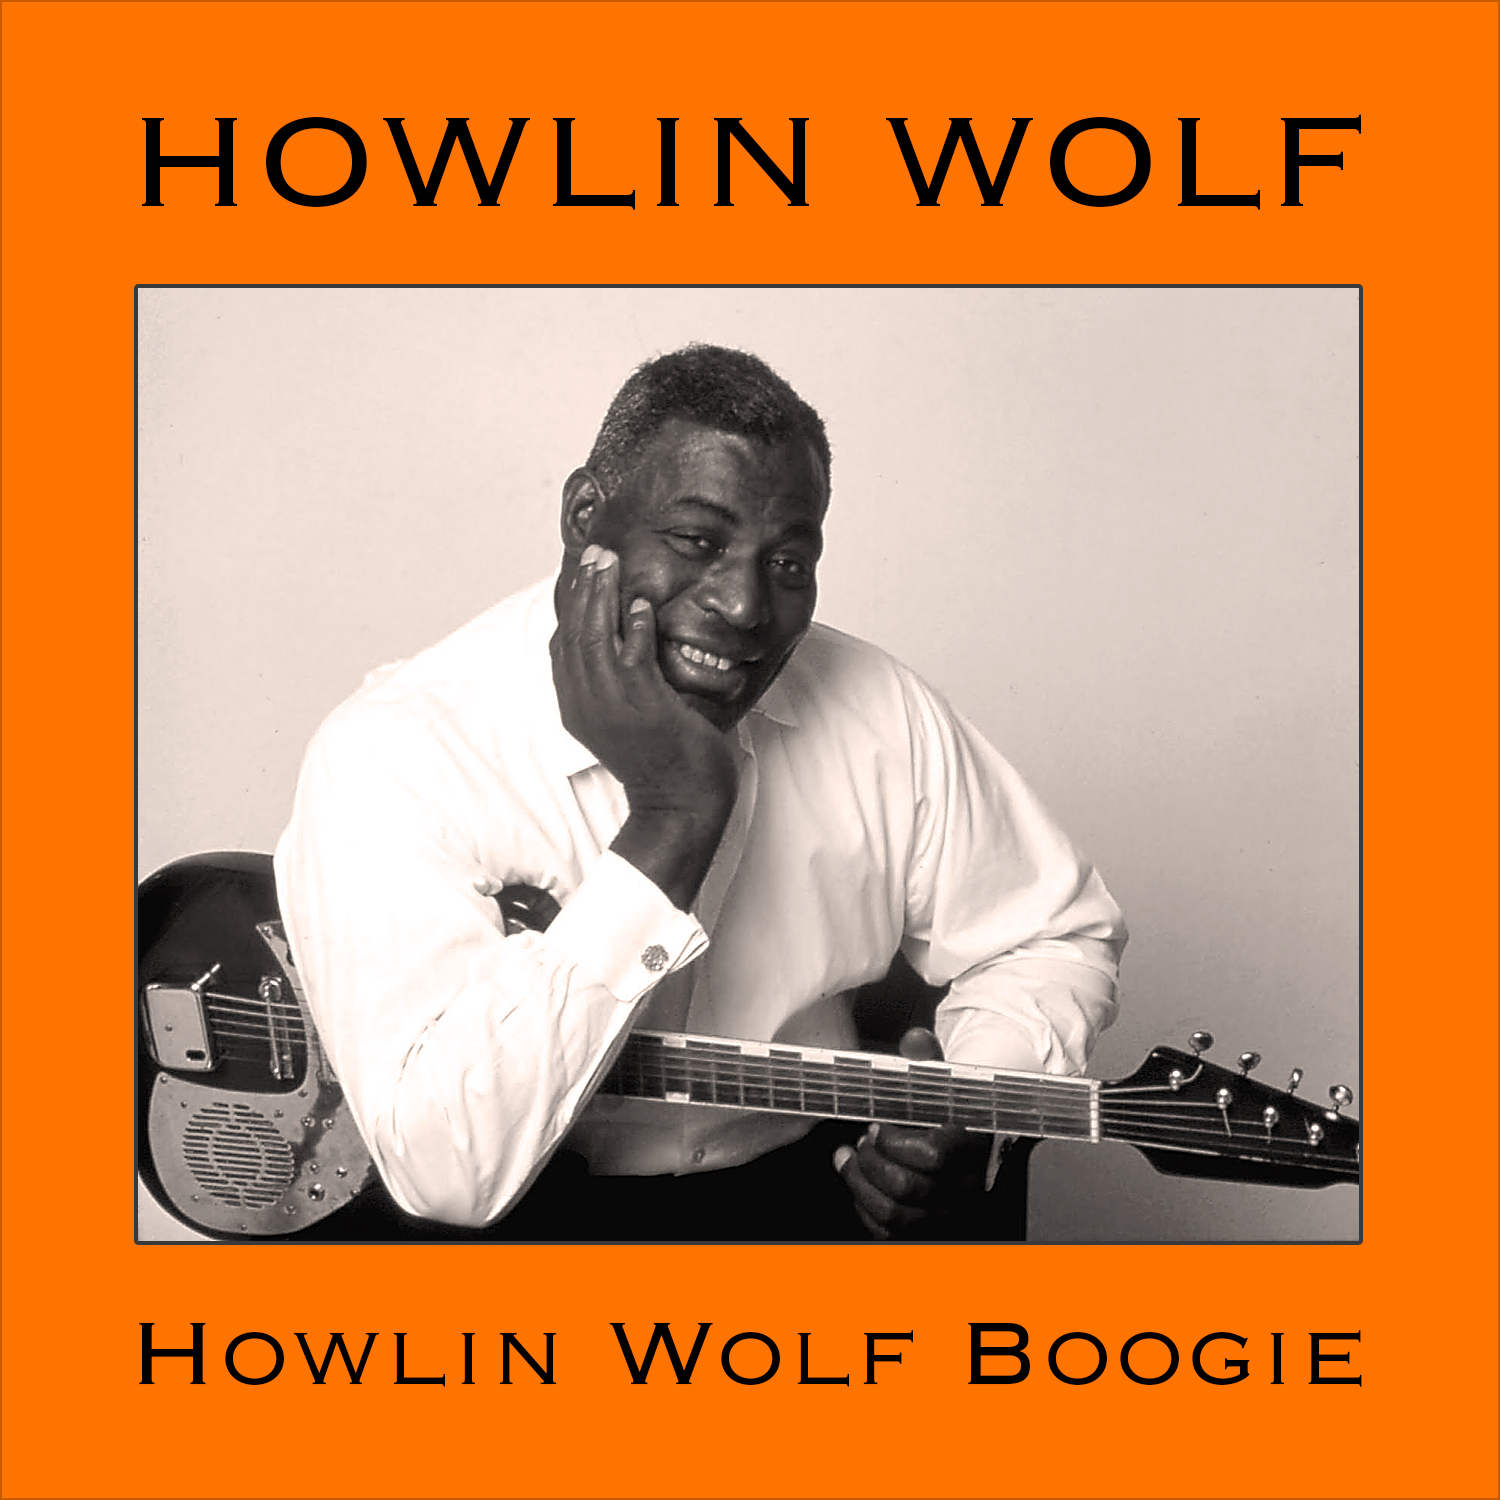 Howlin' Wolf Boogie by Howlin' Wolf